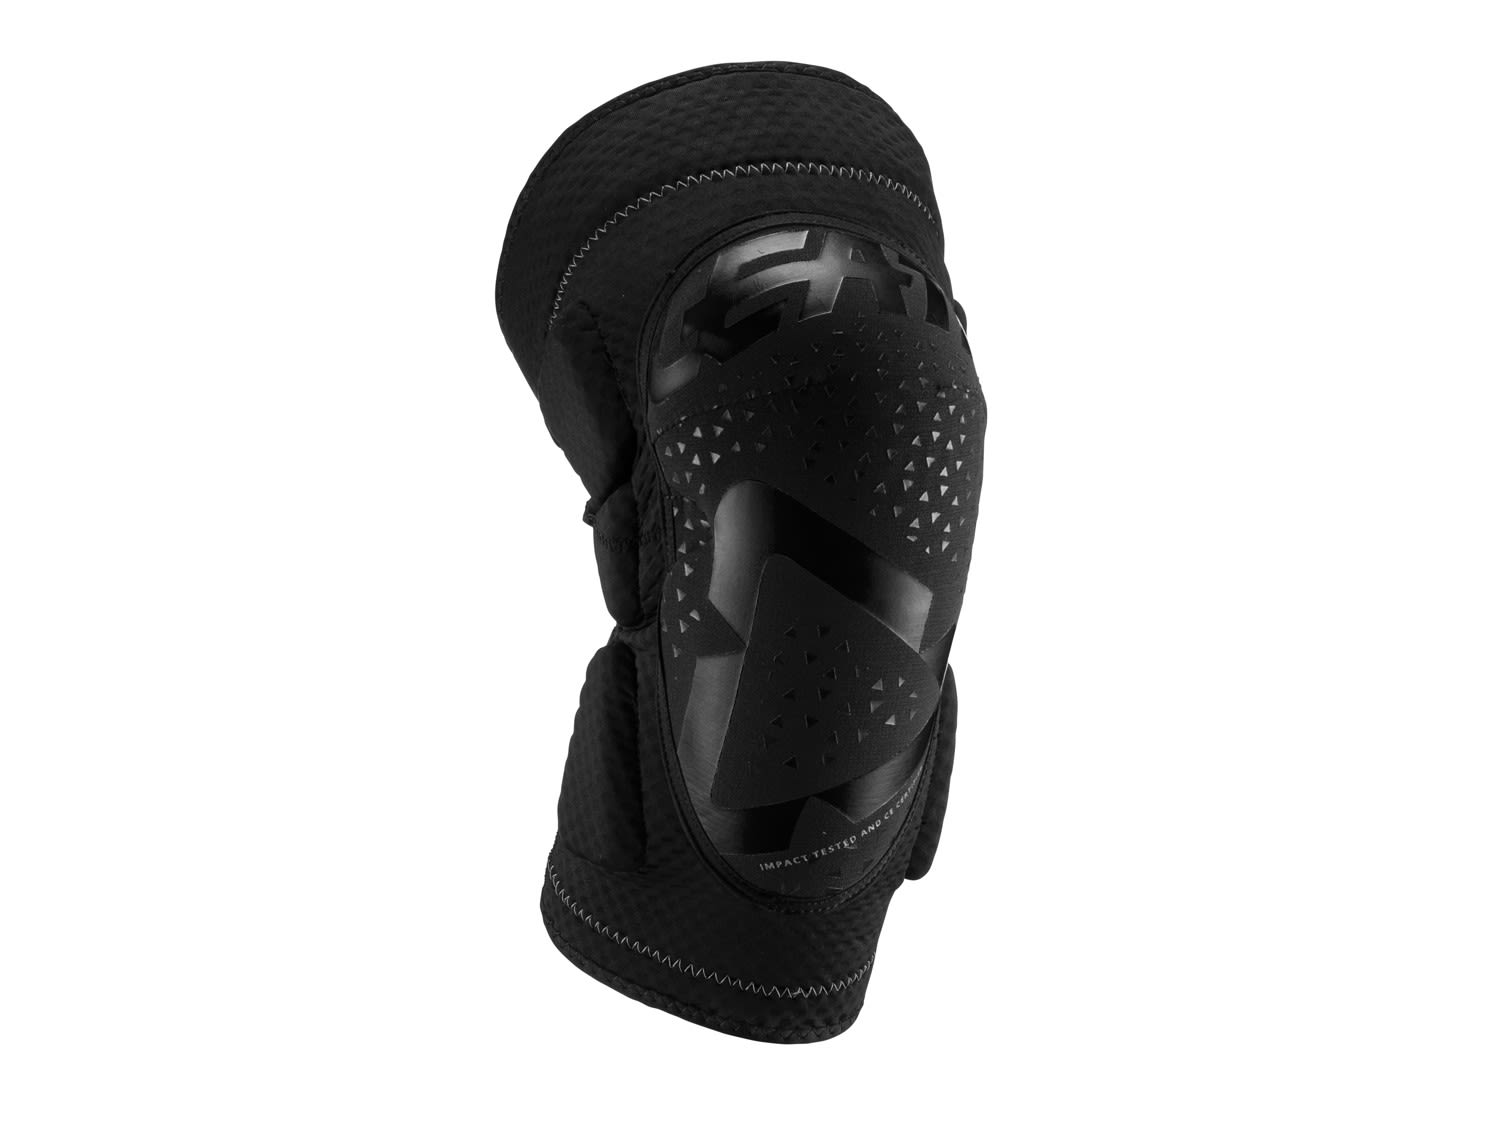 Leatt Knee Guard 3DF 5-0 Schwarz- Knieprotektoren- Grsse S-M - Farbe Black unter Leatt